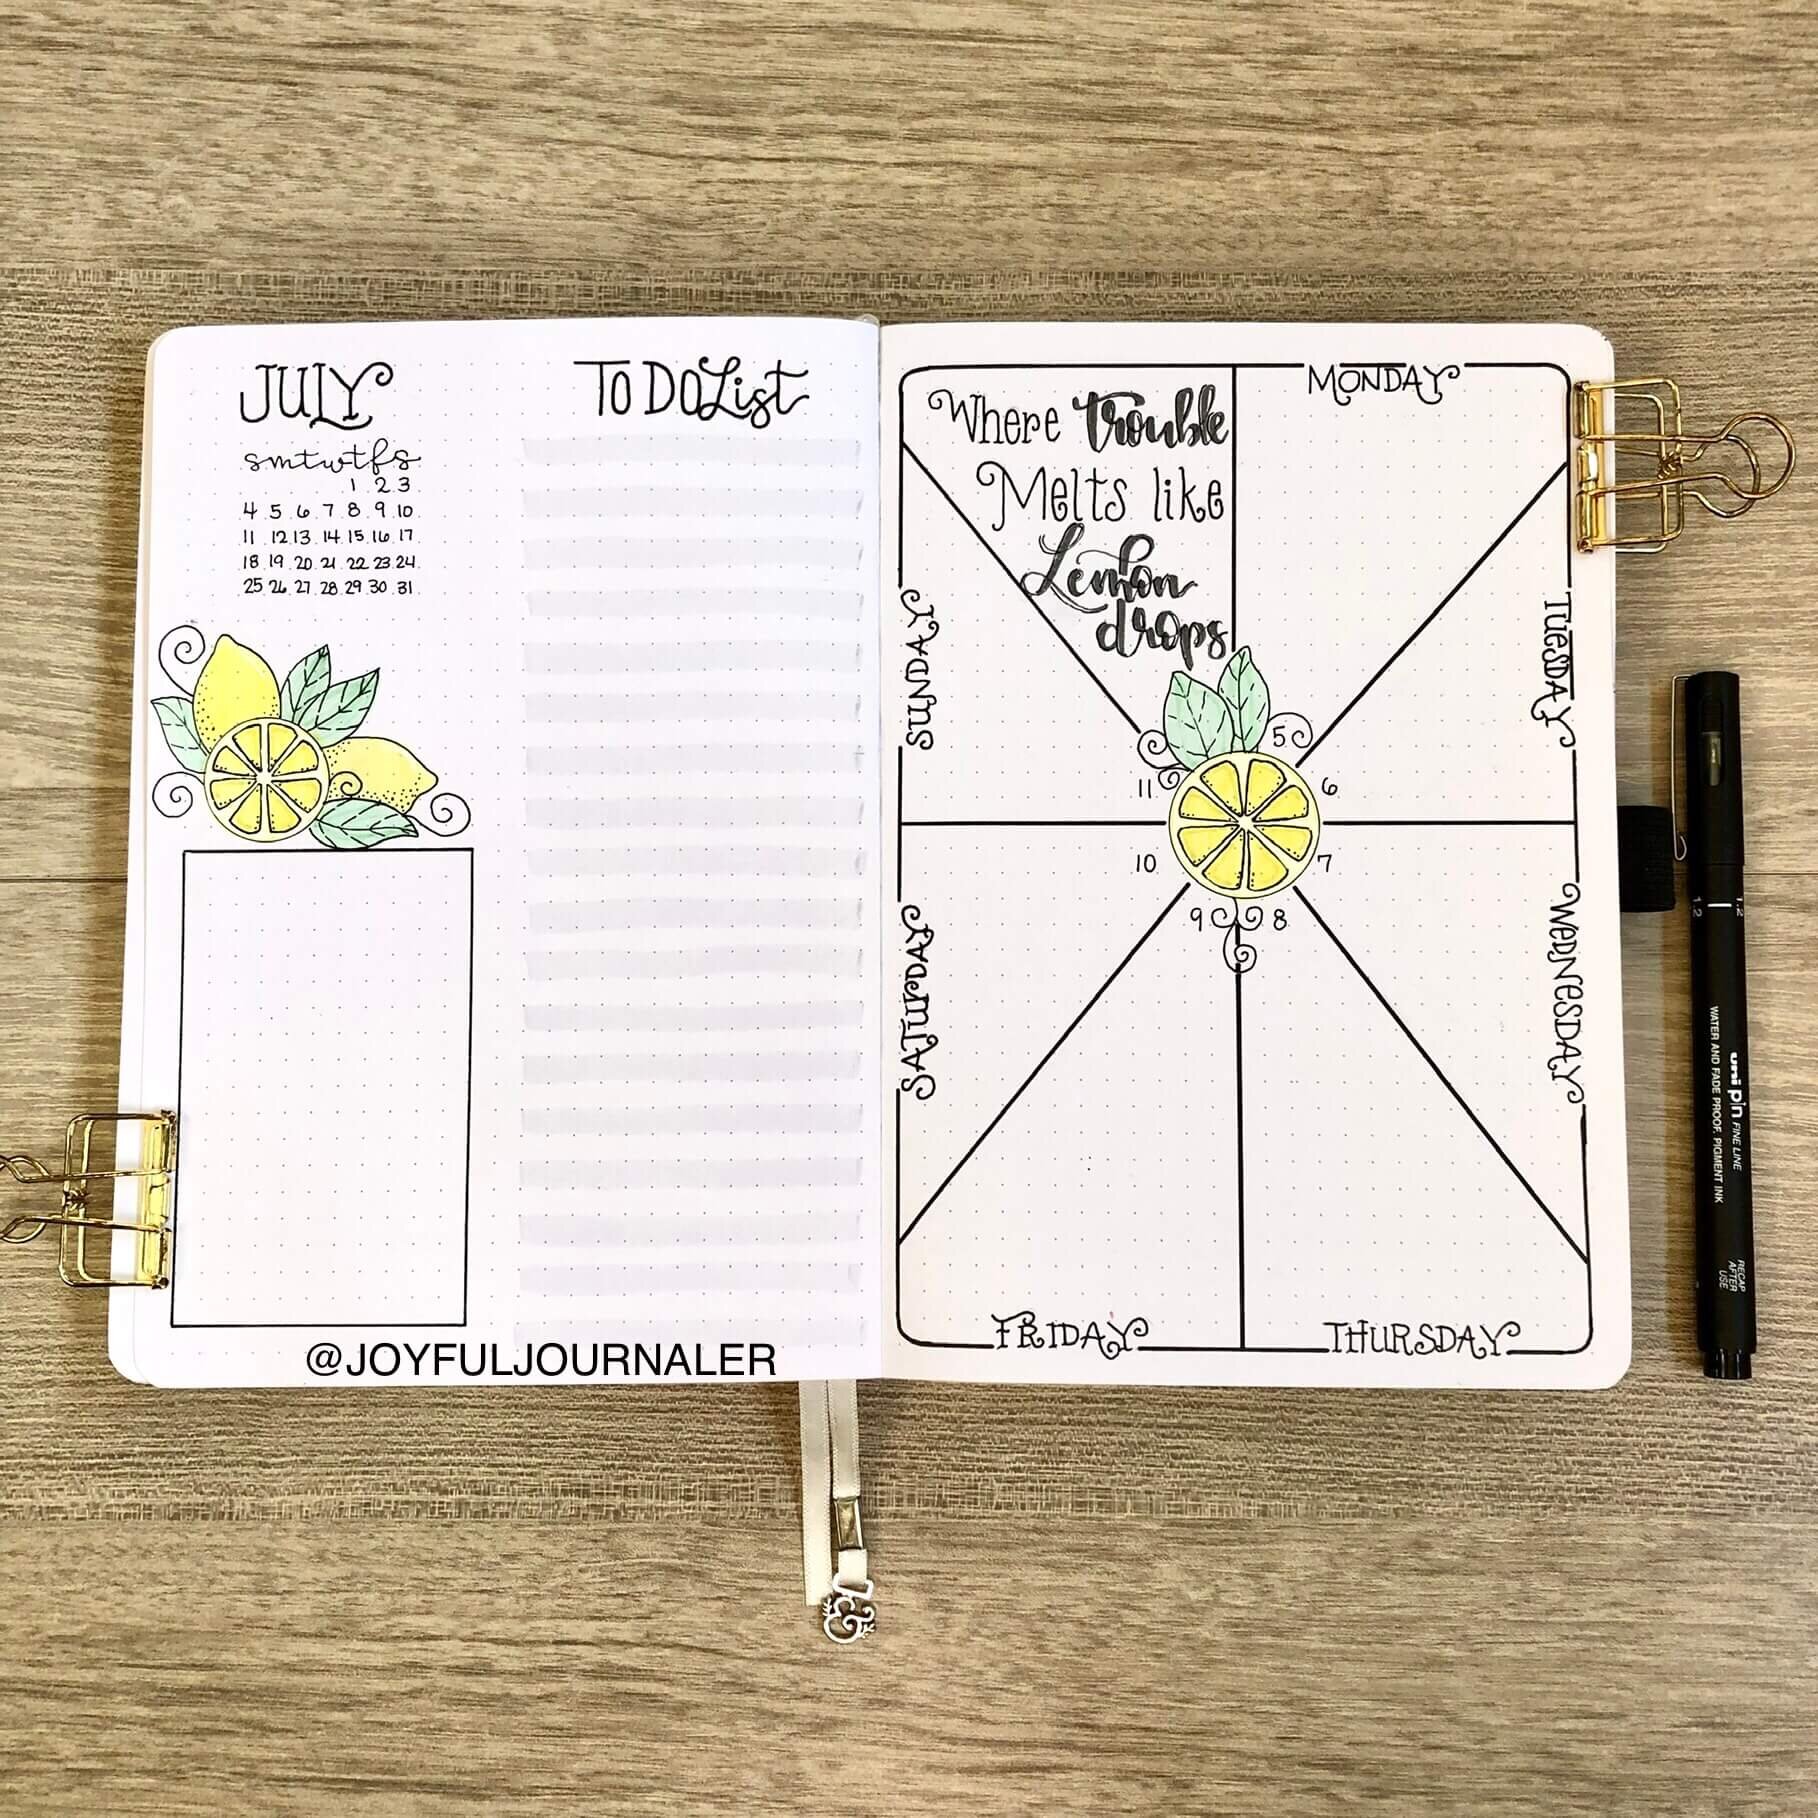 25 Creative Minimalist Bullet Journal Habit Tracker Spreads to Simplify Life